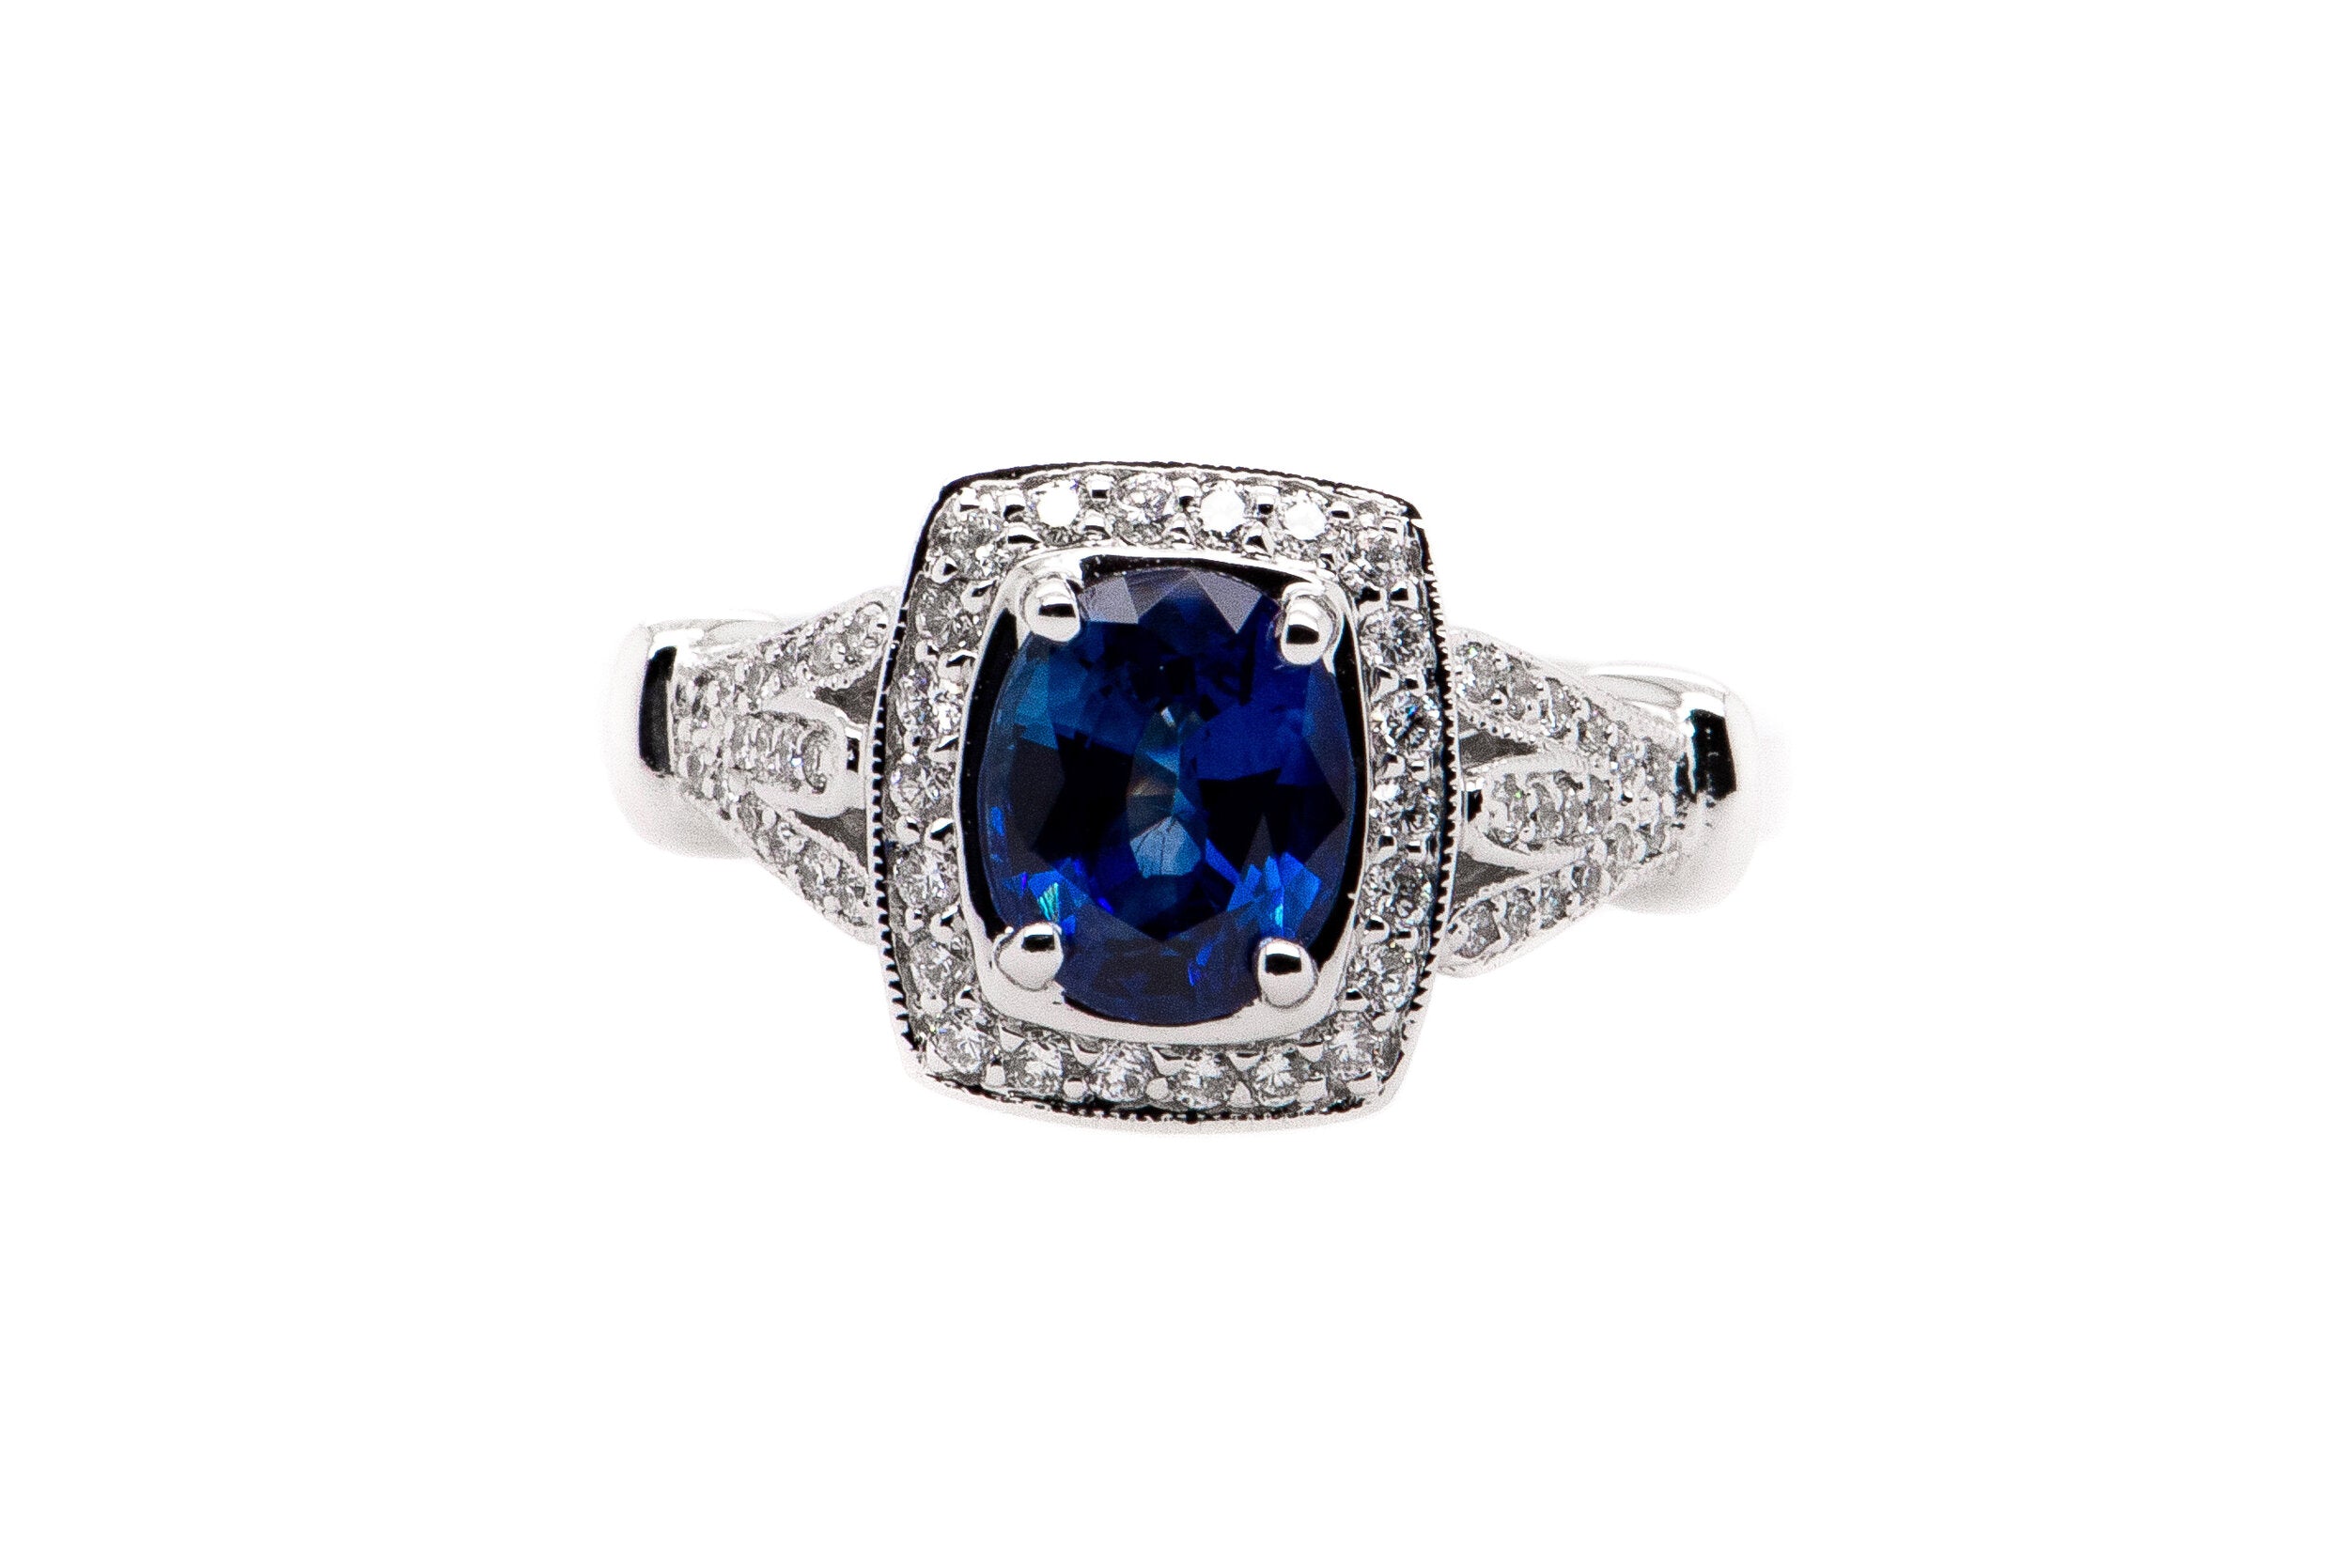 Custom Sapphire and Diamond Ring